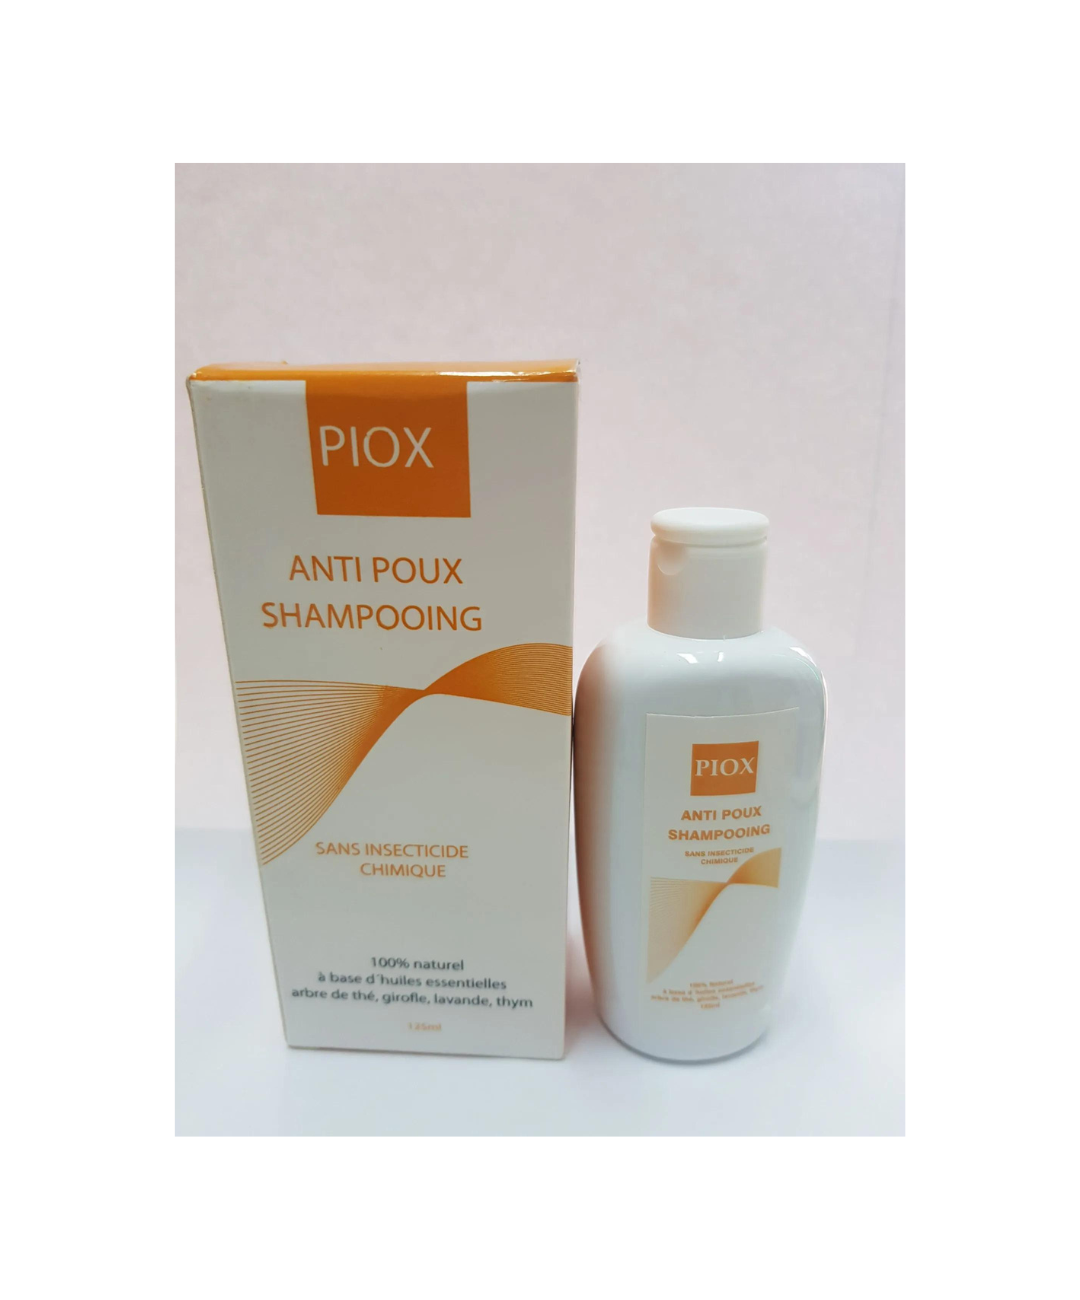 Shampoing anti poux : Achat de shampoing anti poux en ligne